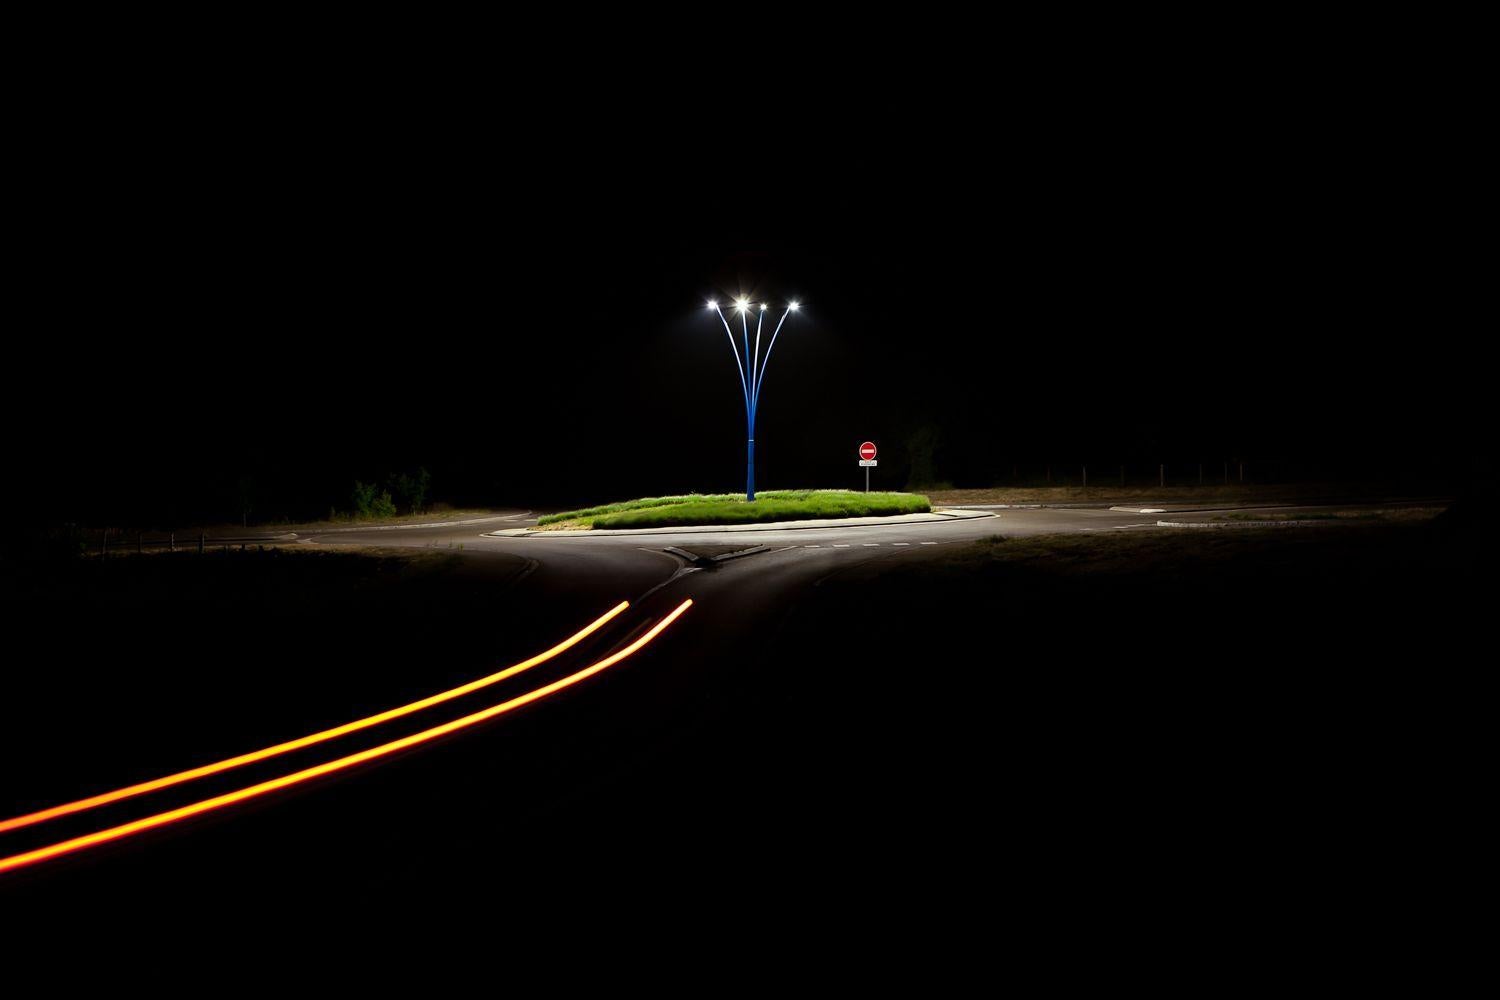 Isola by Xavier Dumoulin - Contemporary night photography, dark road